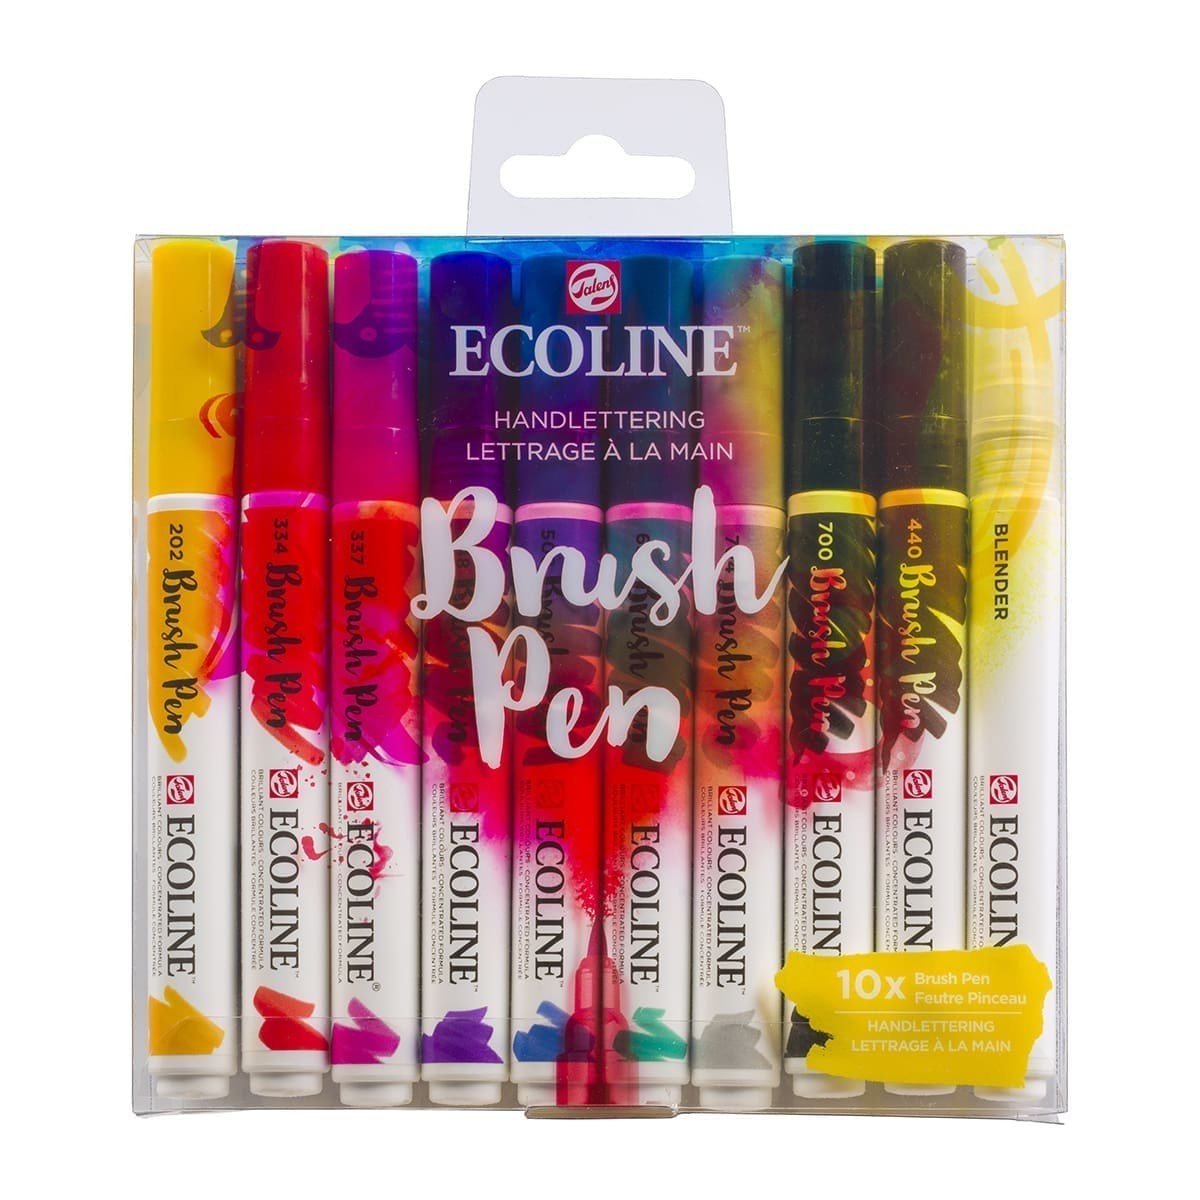 Ecoline Brush Pen 10-set - Handlettering - Royal Talens - Tidformera